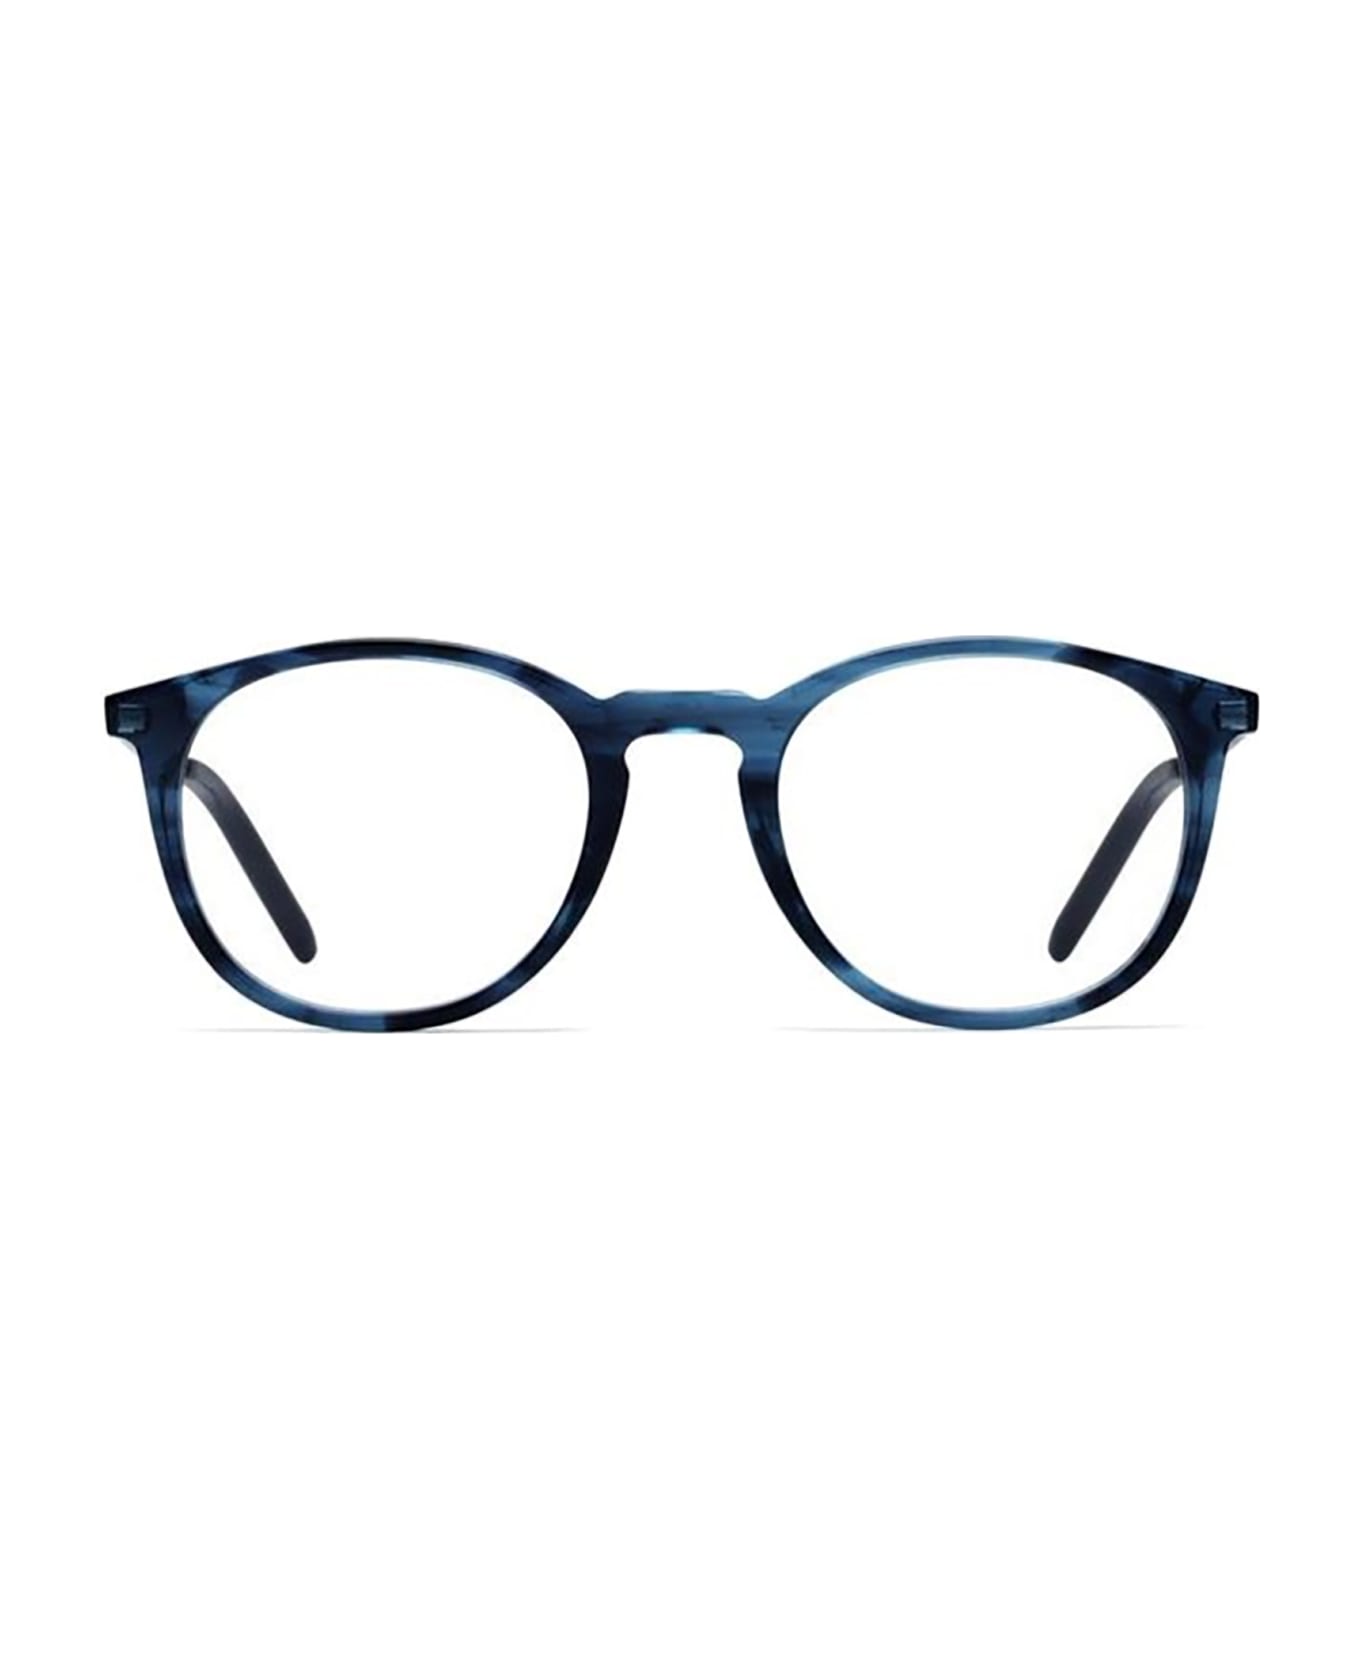 Hugo Boss HG 1017 Eyewear - Striped Blue